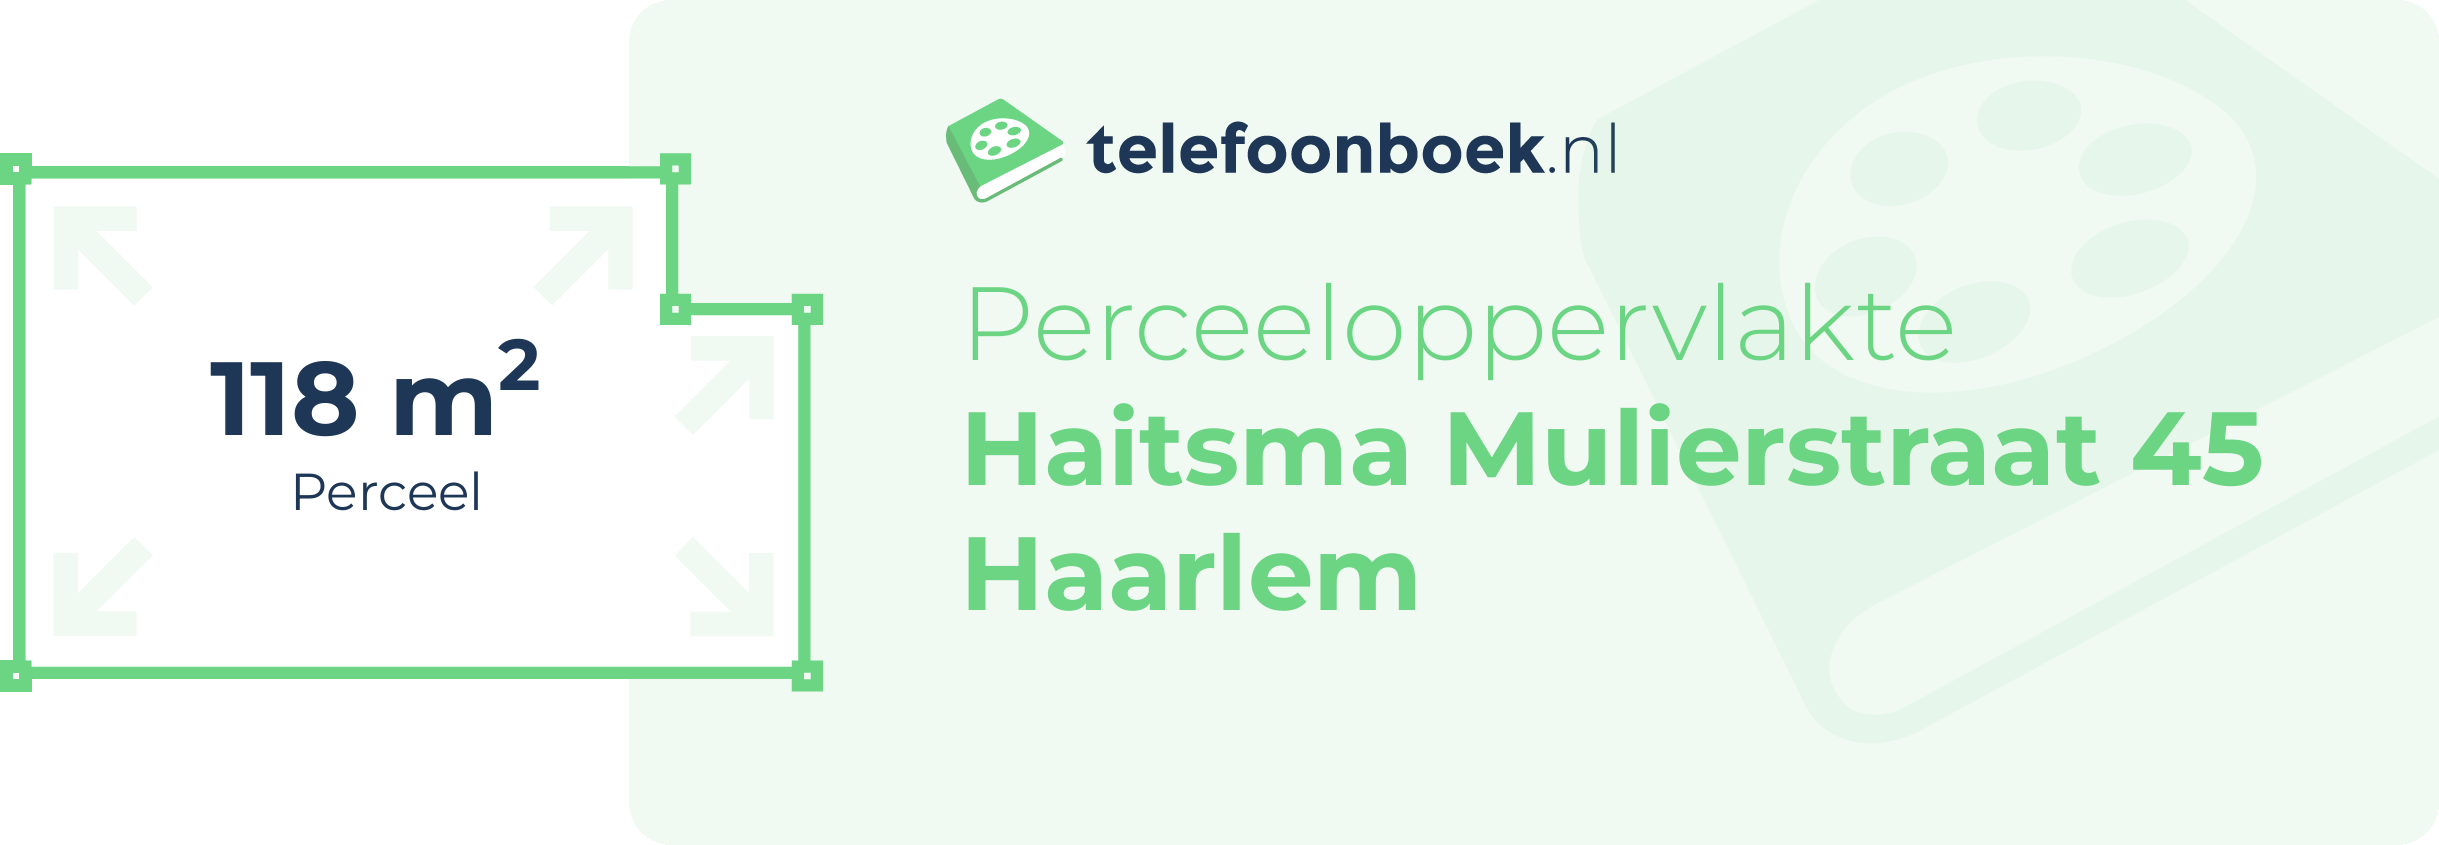 Perceeloppervlakte Haitsma Mulierstraat 45 Haarlem